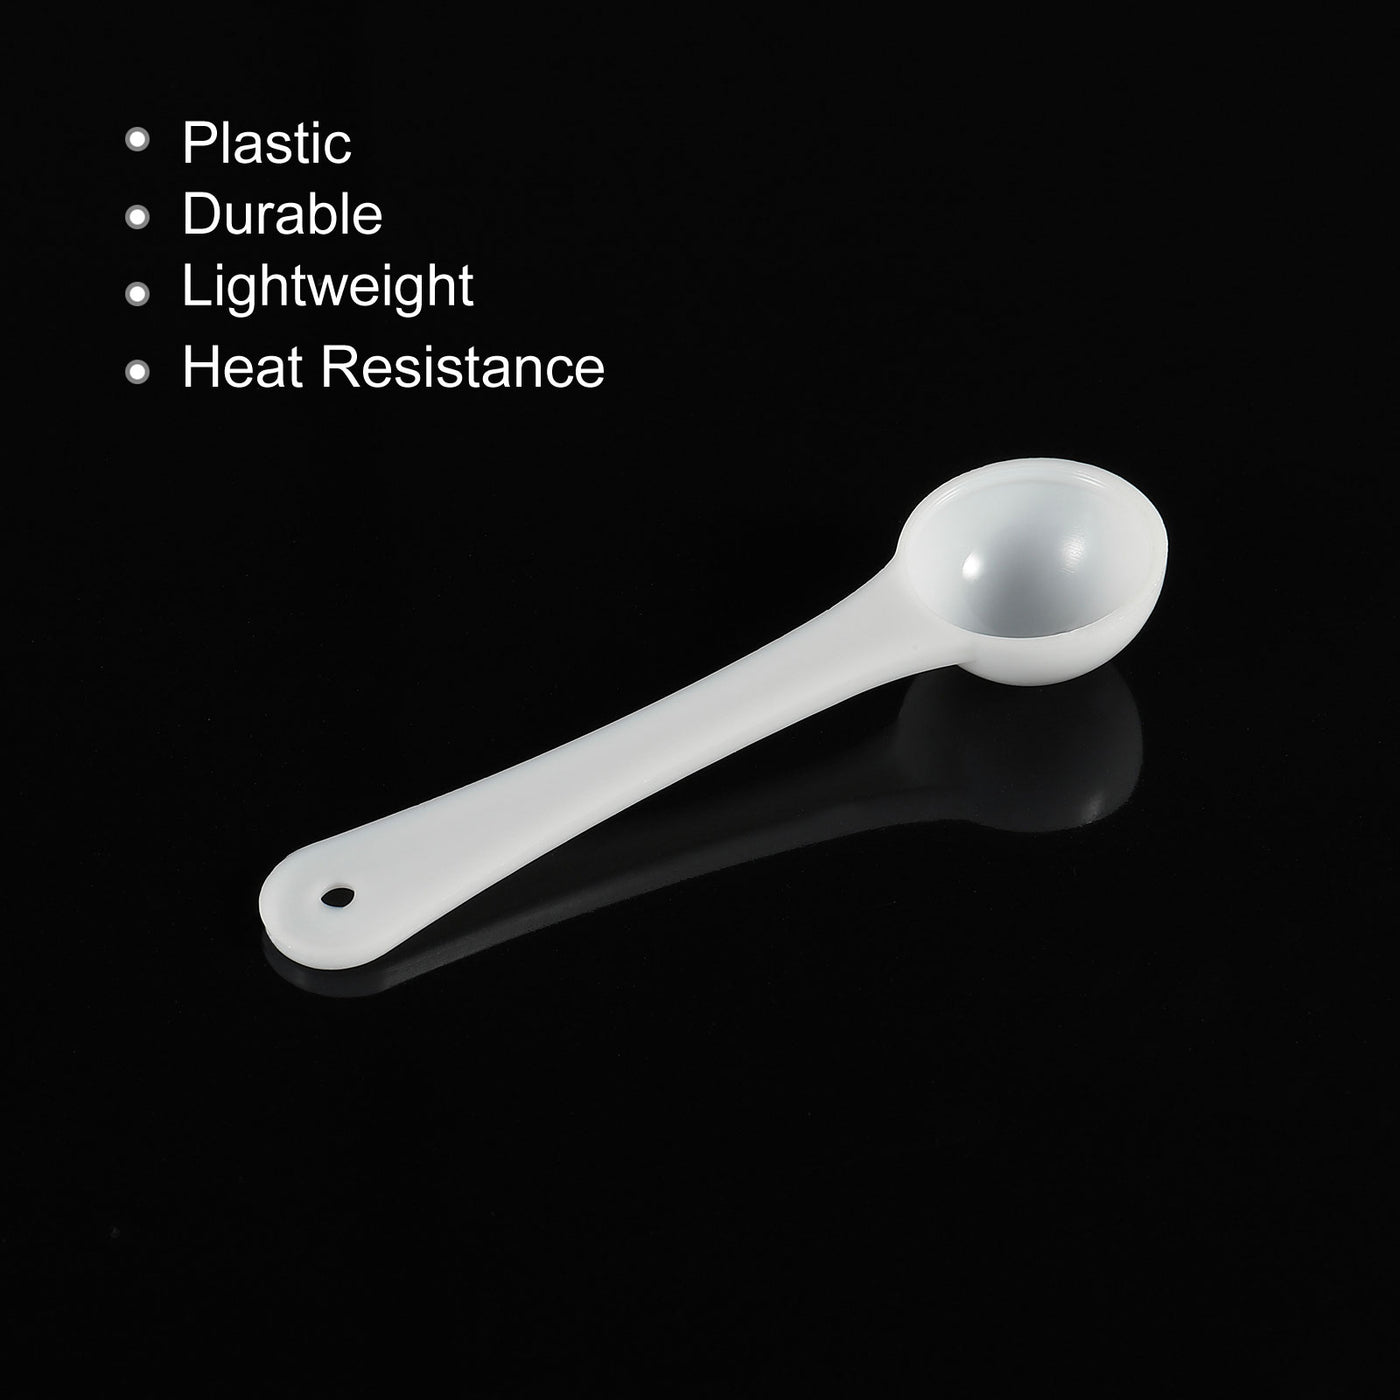 Harfington Micro Spoons 2 Gram Measuring Scoop Plastic Round Bottom Mini Spoon 30Pcs